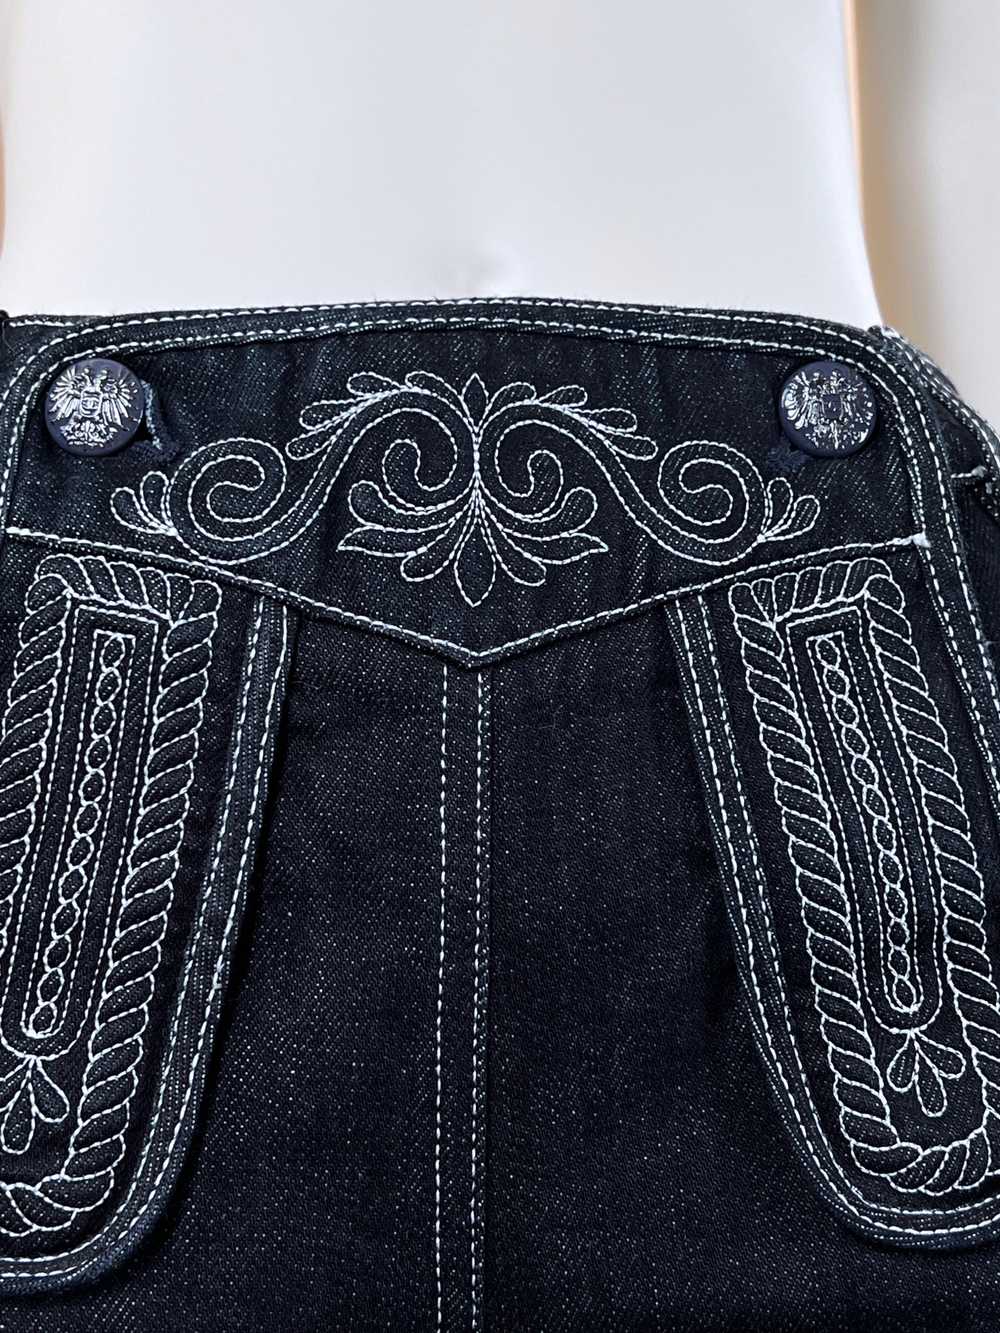 Chanel Paris/Salzburg Embroidered Crop Jeans - image 4